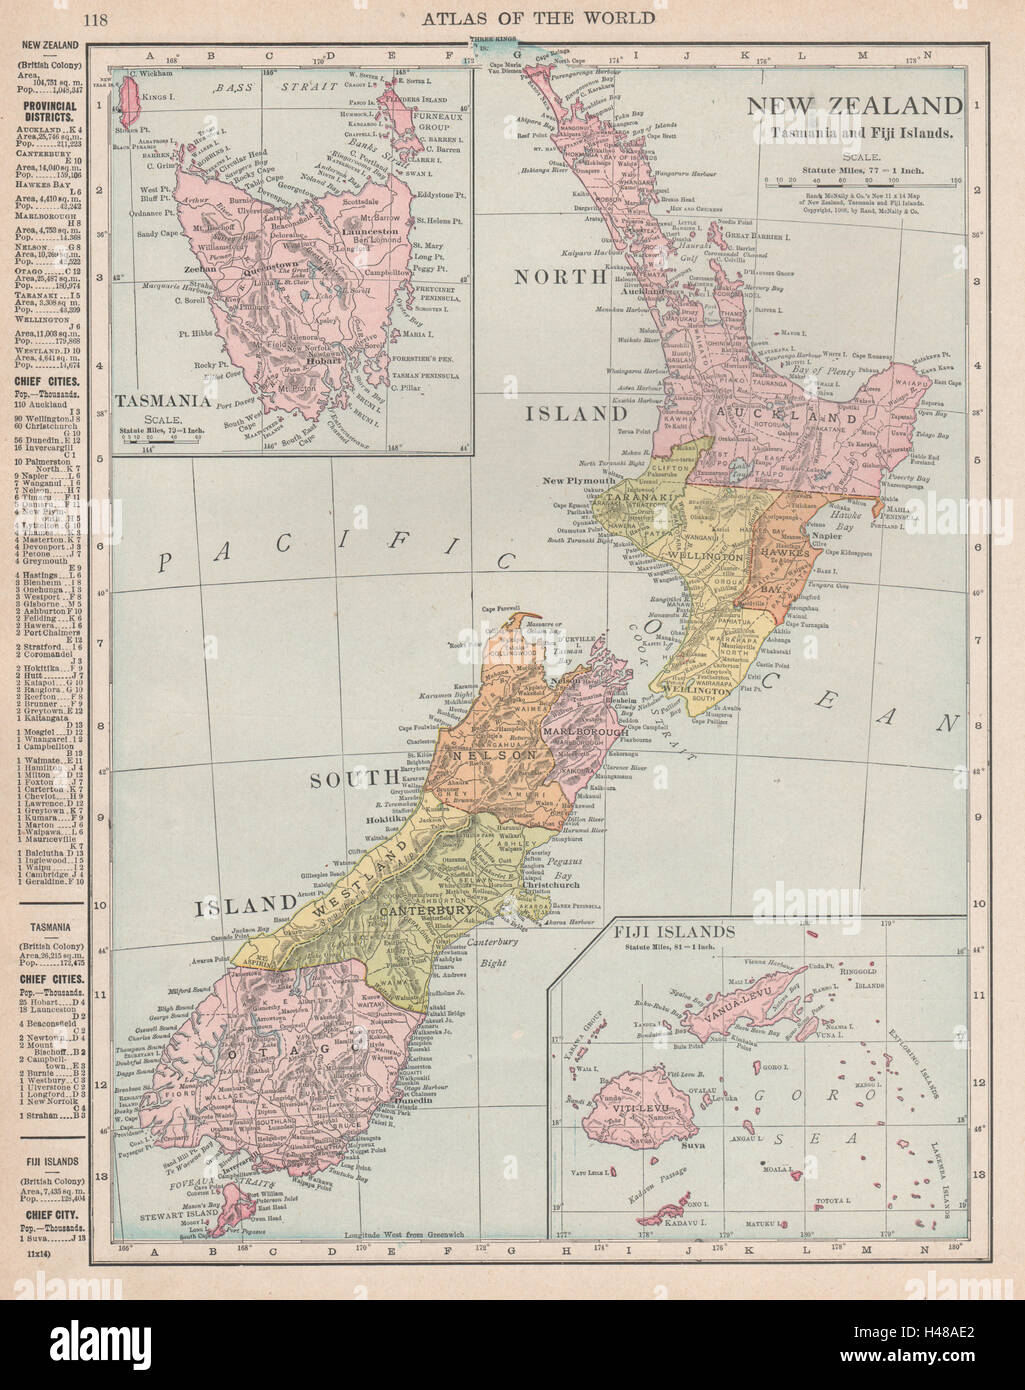 New Zealand, Tasmania and Fiji Islands. RAND MCNALLY 1912 old antique map Stock Photo